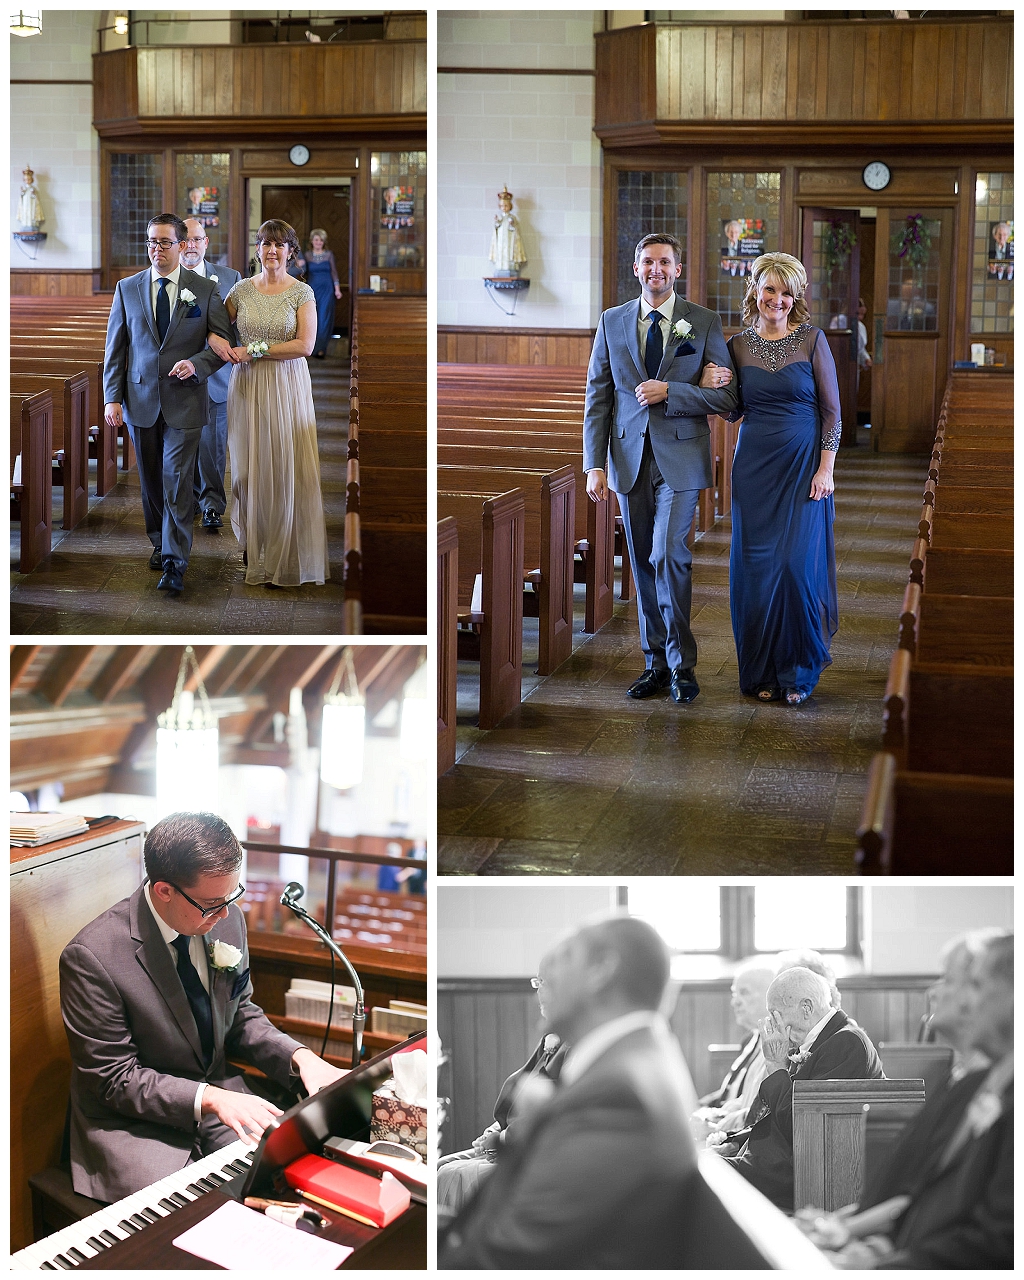 Cincinnati Wedding Photography - The Renauds - Stacey & Ryan's Wedding